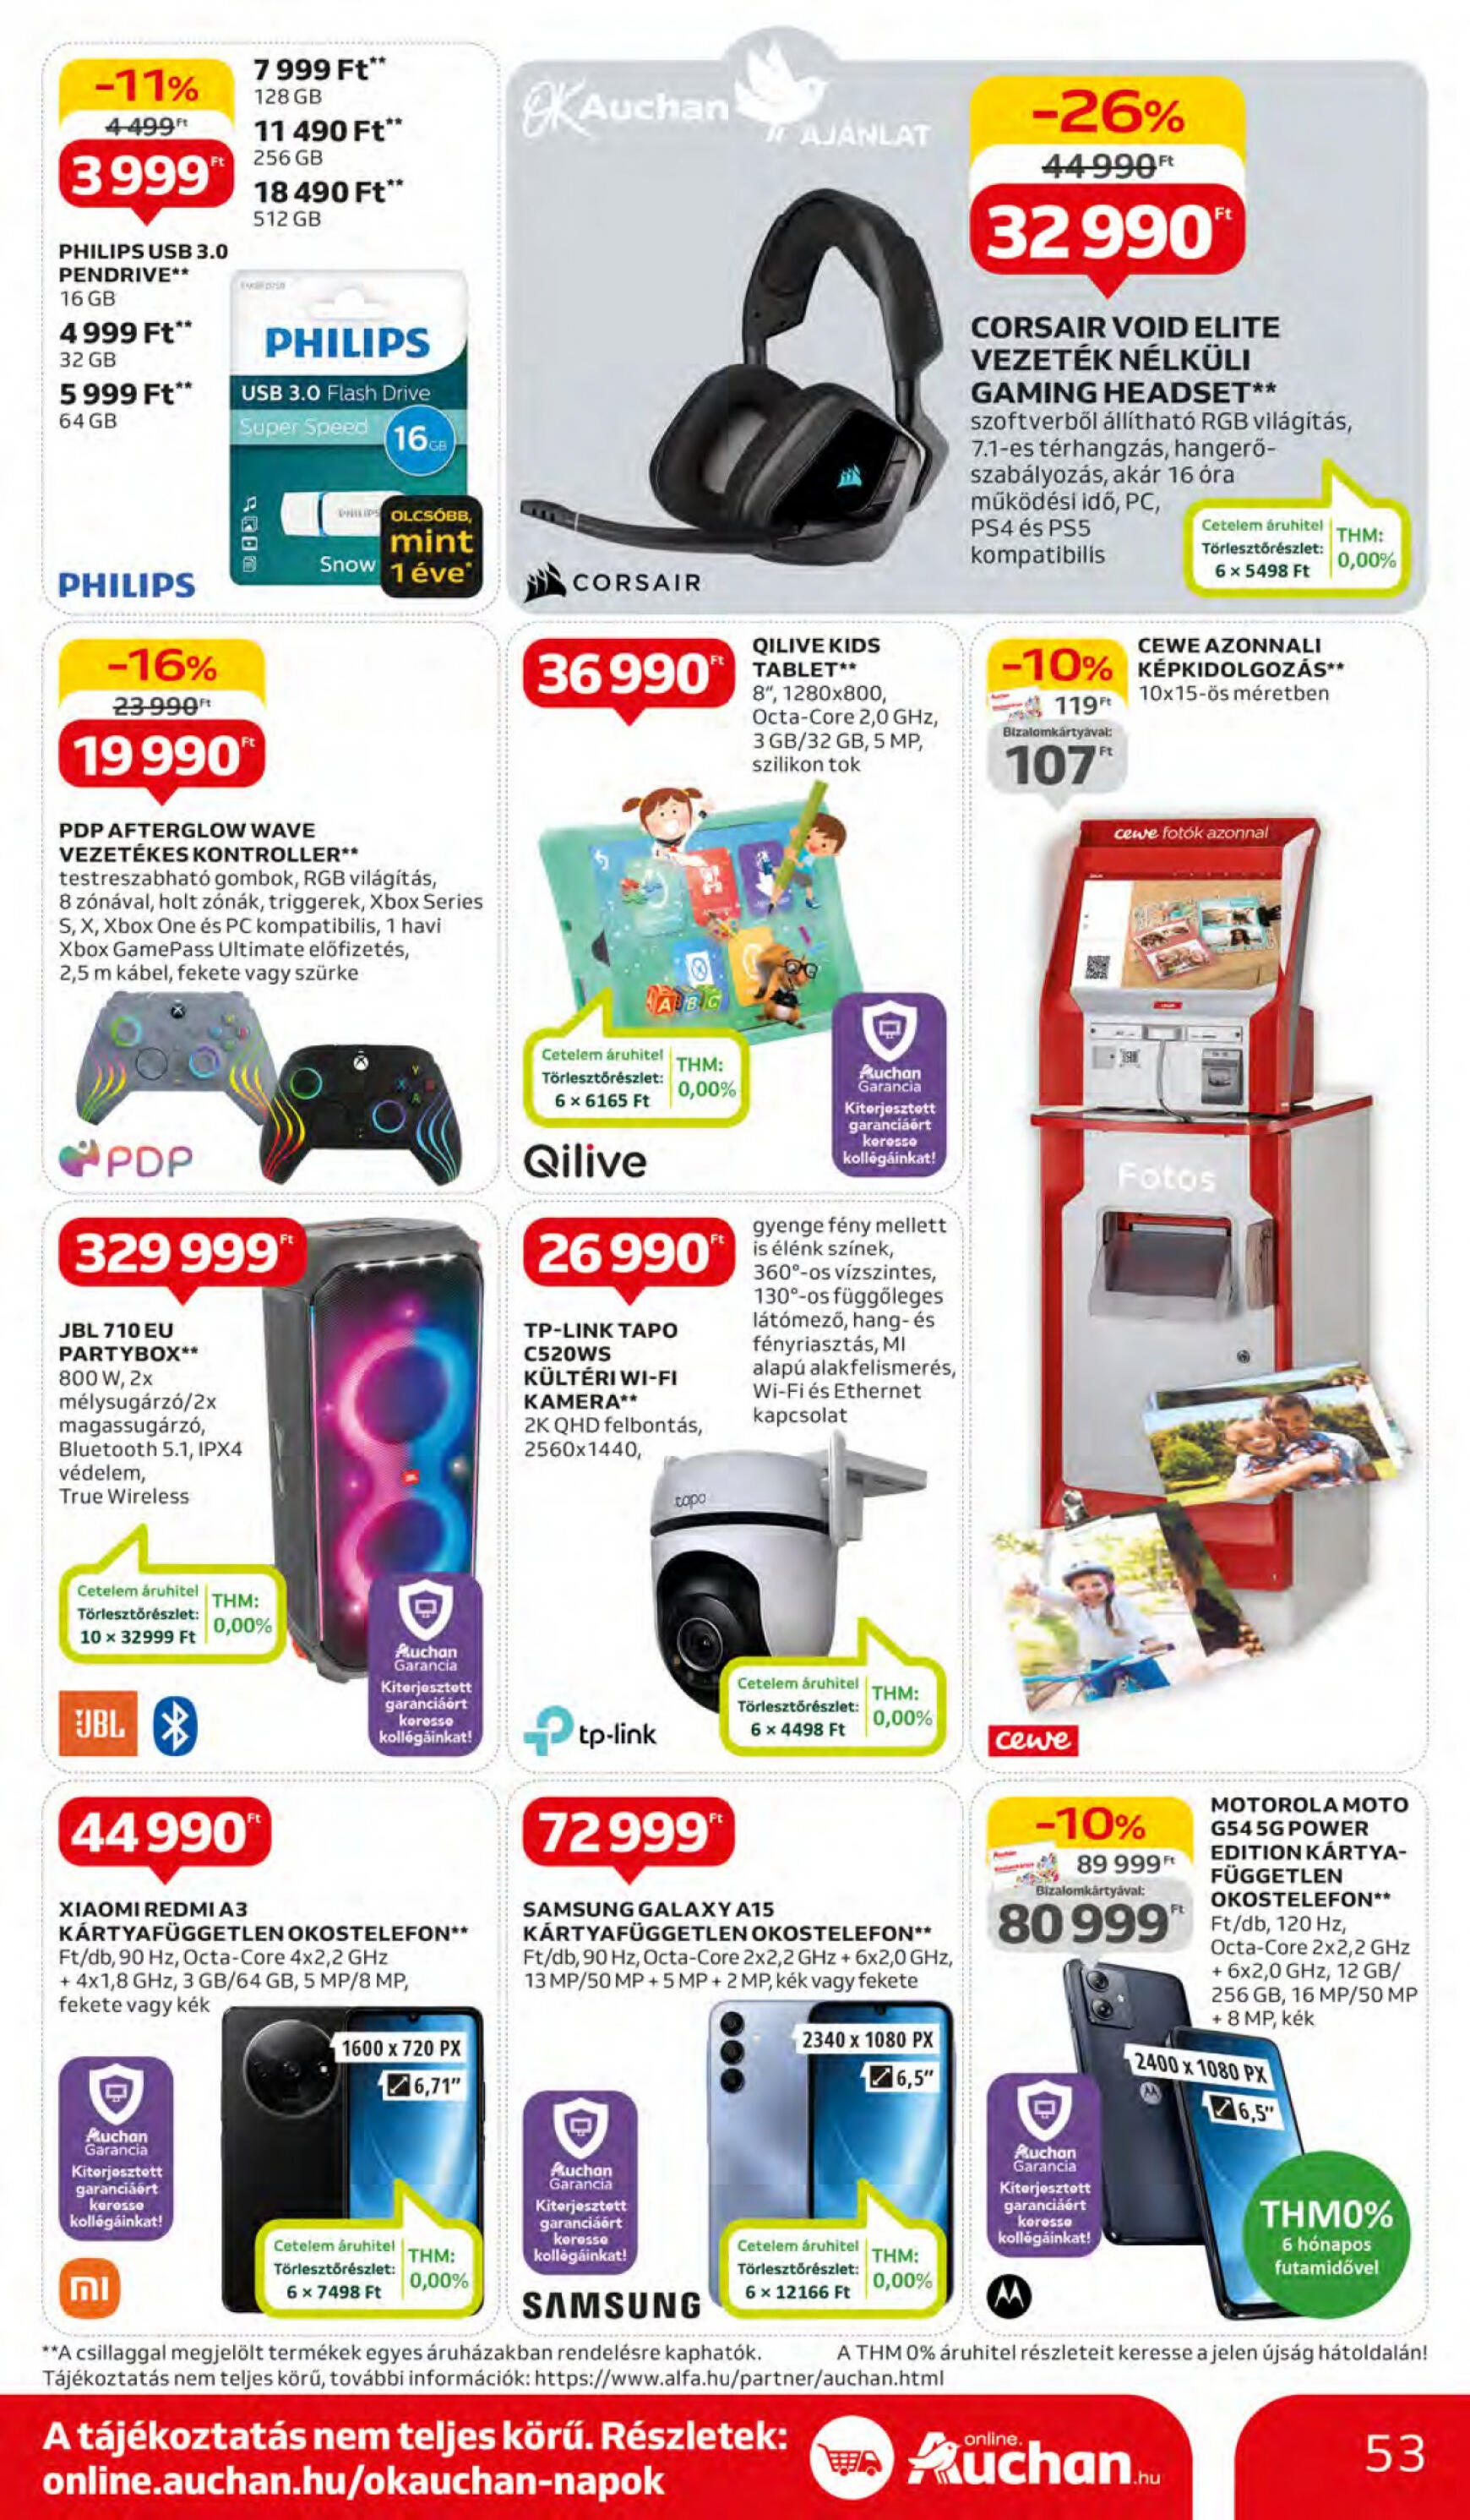 auchan - Aktuális újság Auchan 04.11. - 04.17. - page: 53